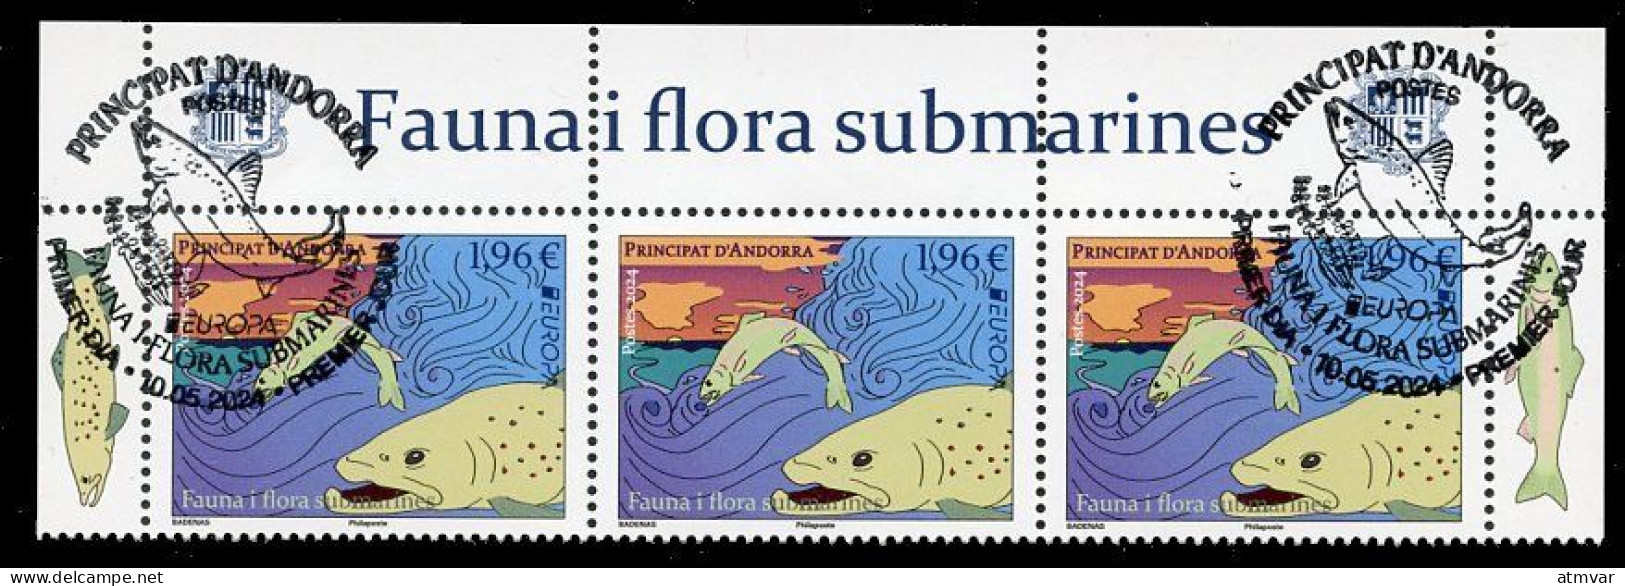 ANDORRA Postes (2024) EUROPA Fauna I Flora Submarines, Truite, Arc-en-ciel, Trucha, Salmo Trutta Fario, Trout, Forelle - Unused Stamps